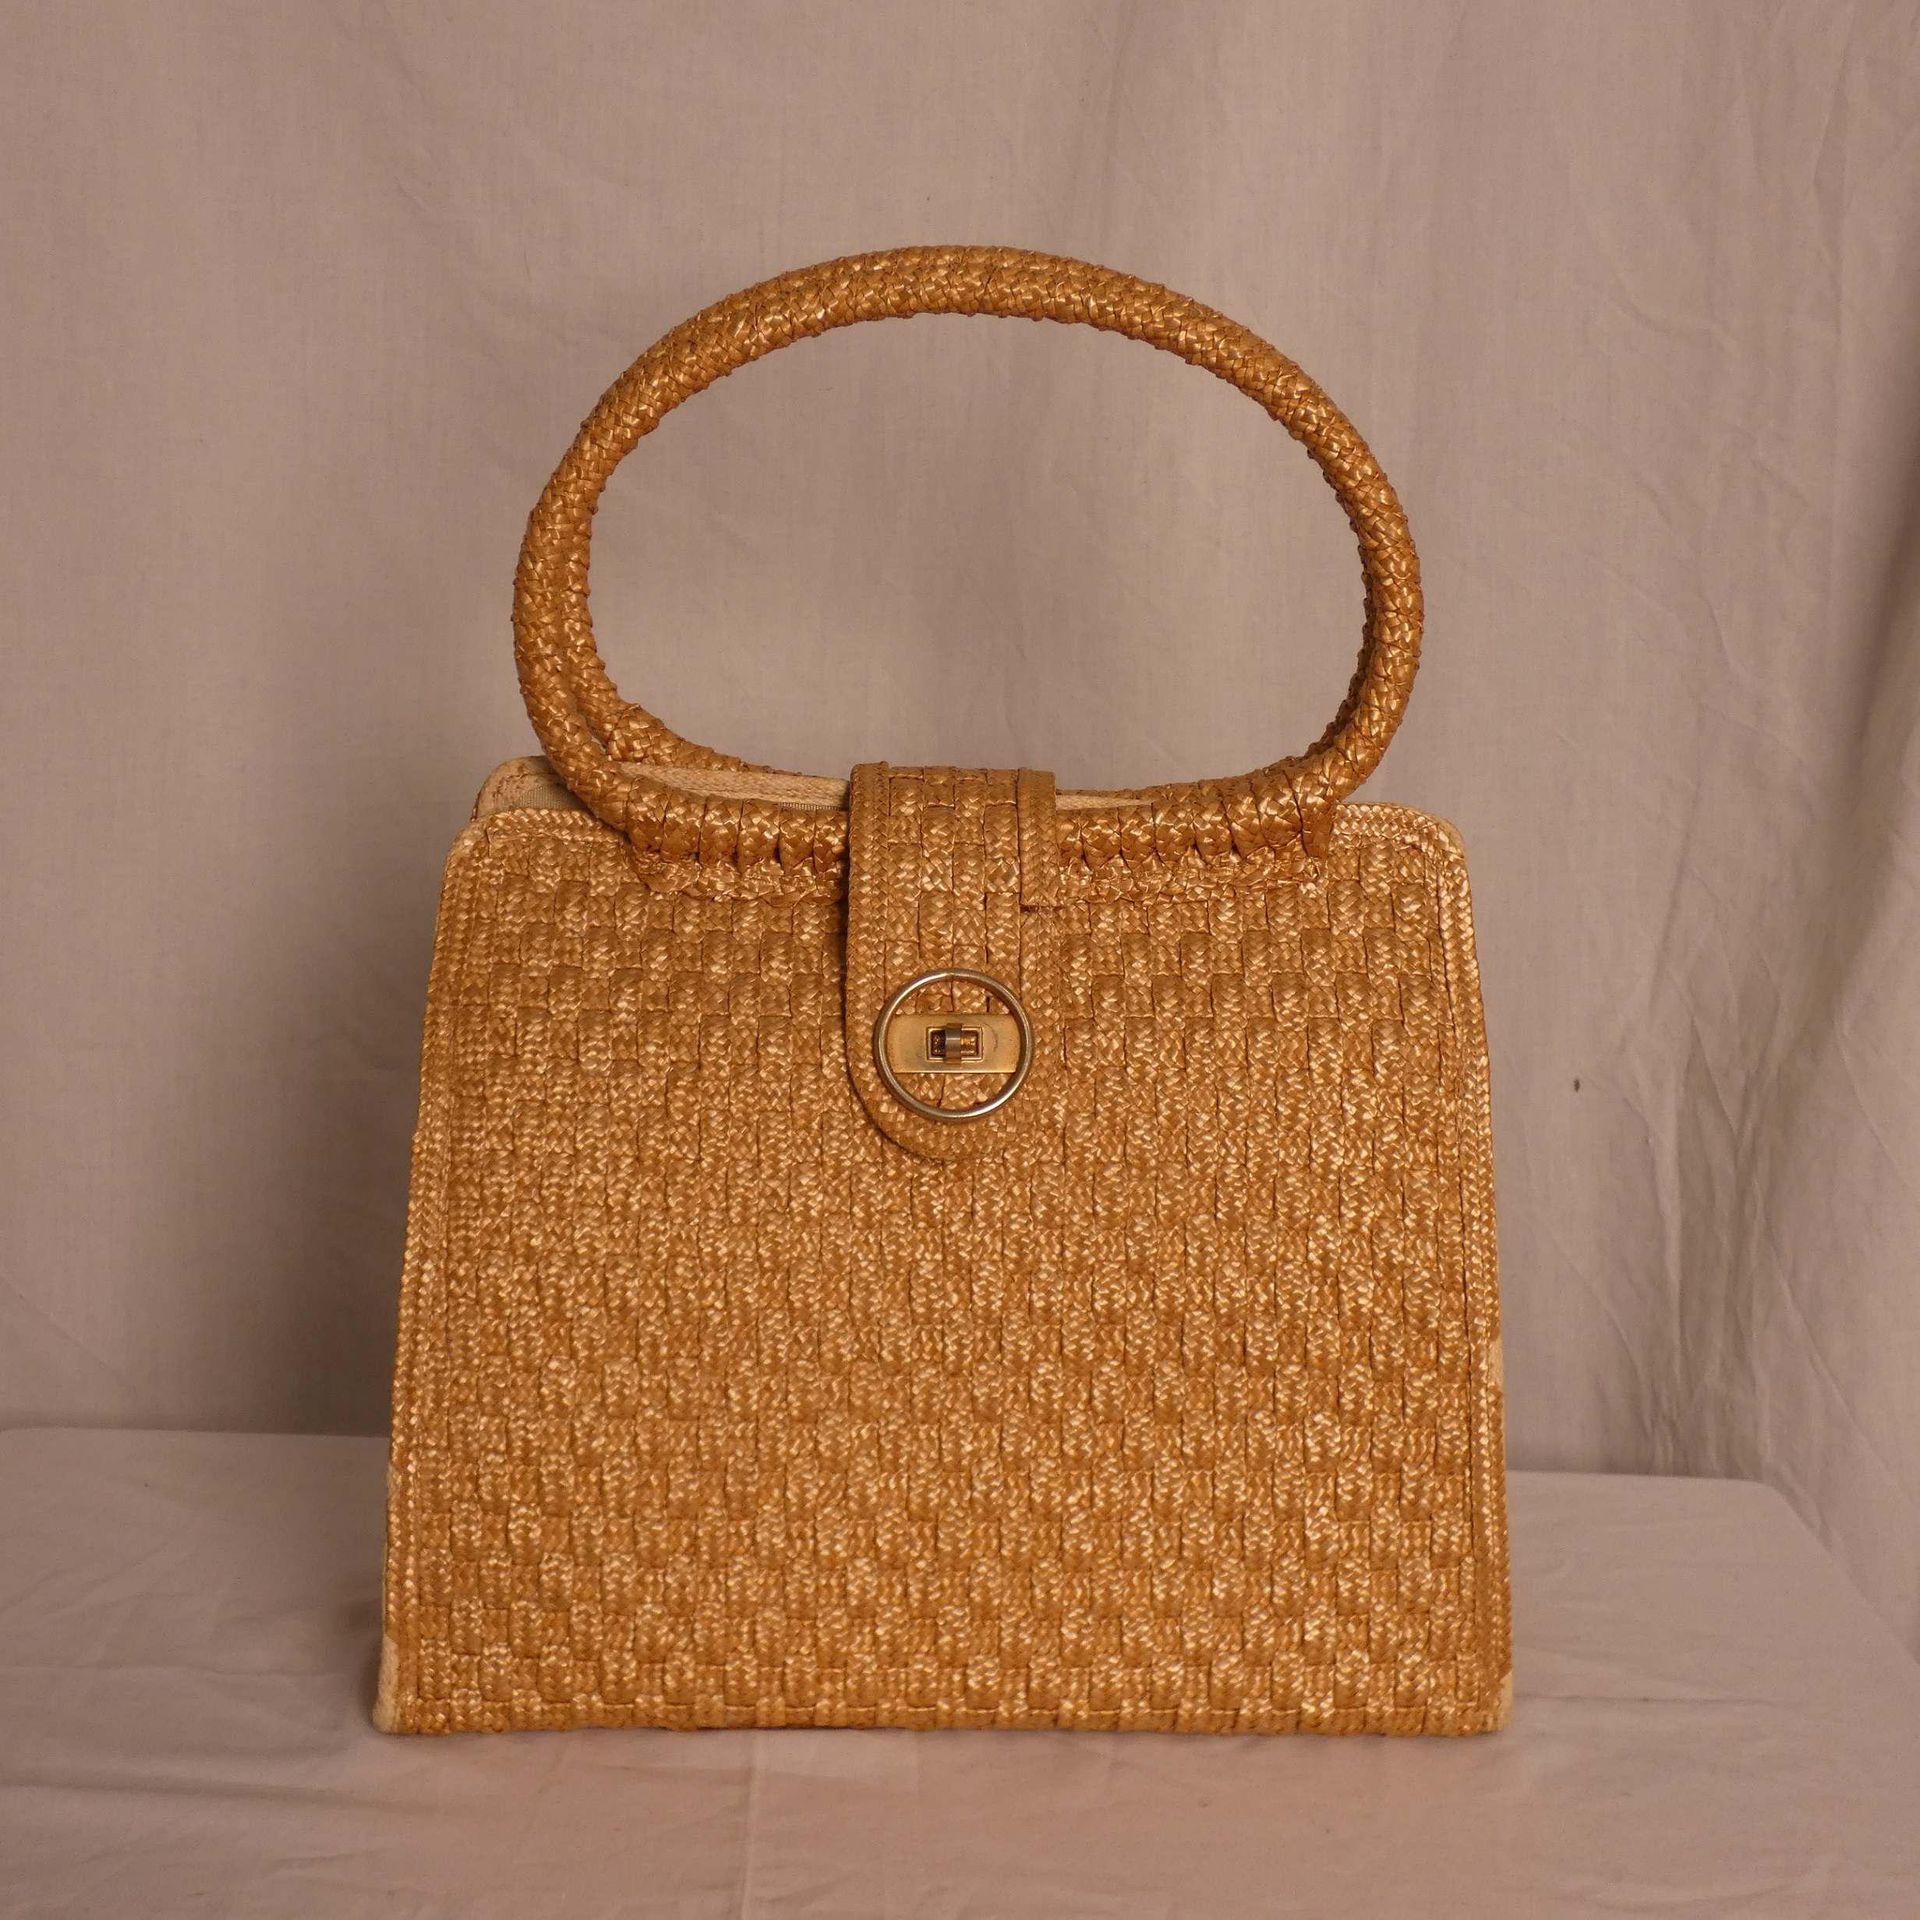 Null Woven handbag. Ecru striped fabric inside.
Dimensions: height 45cm with han&hellip;